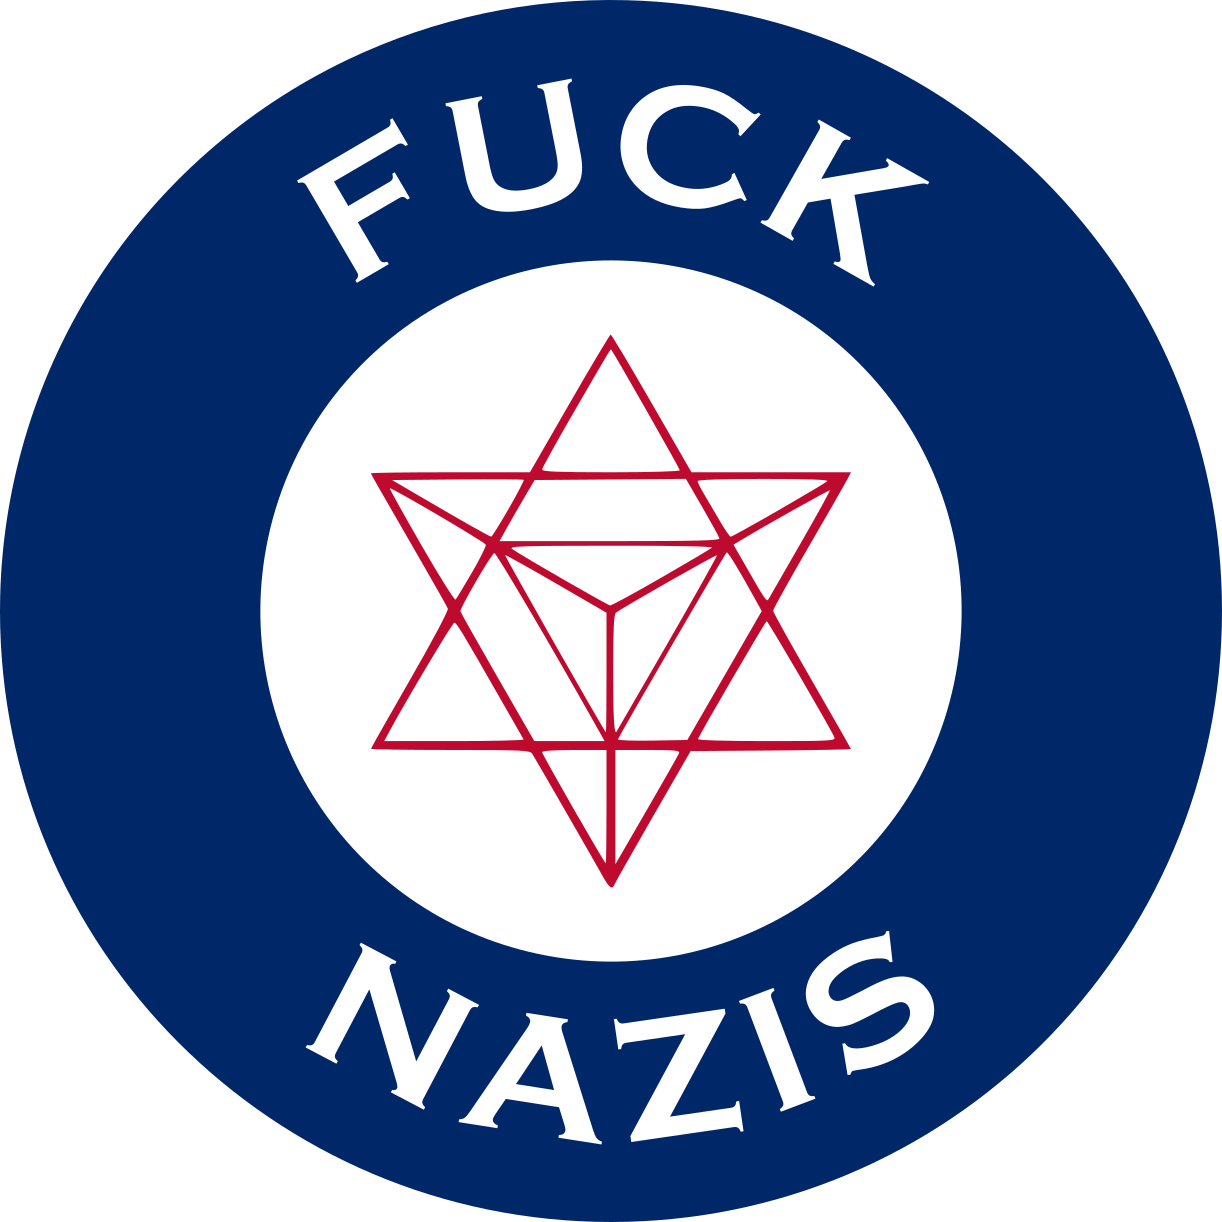 Fuck Nazis returns to the net.